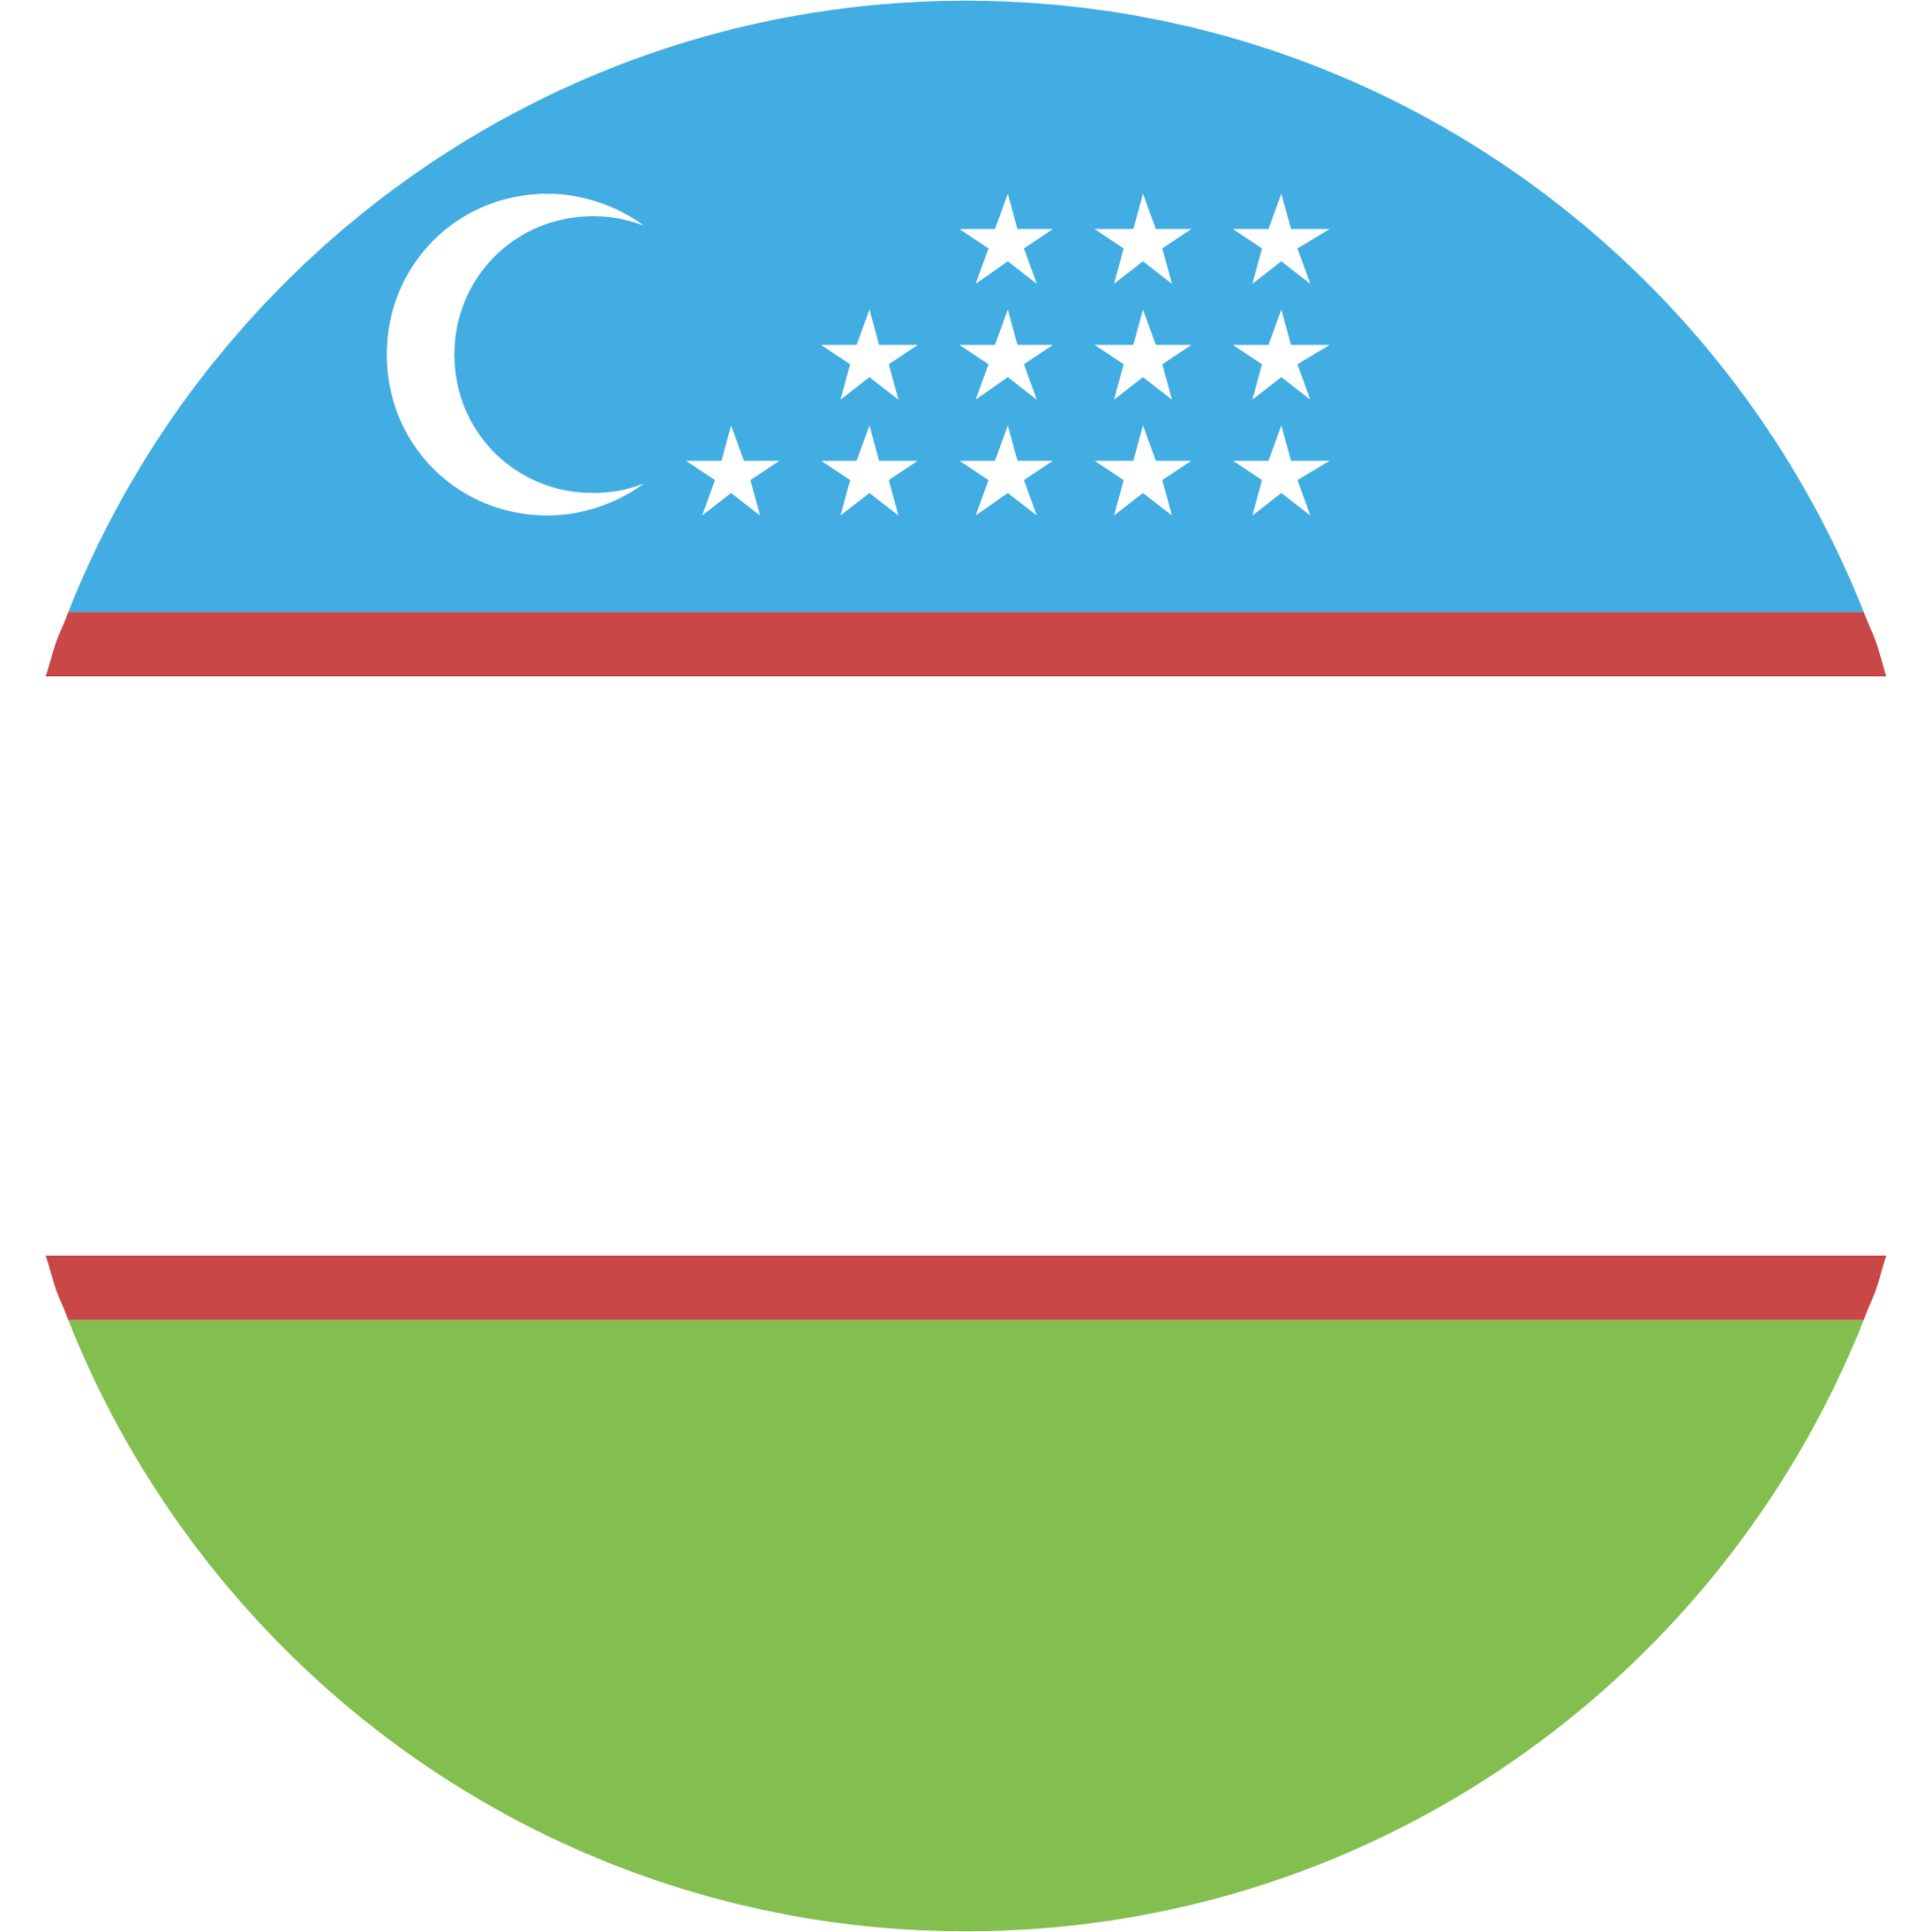 uzbekistan emoji